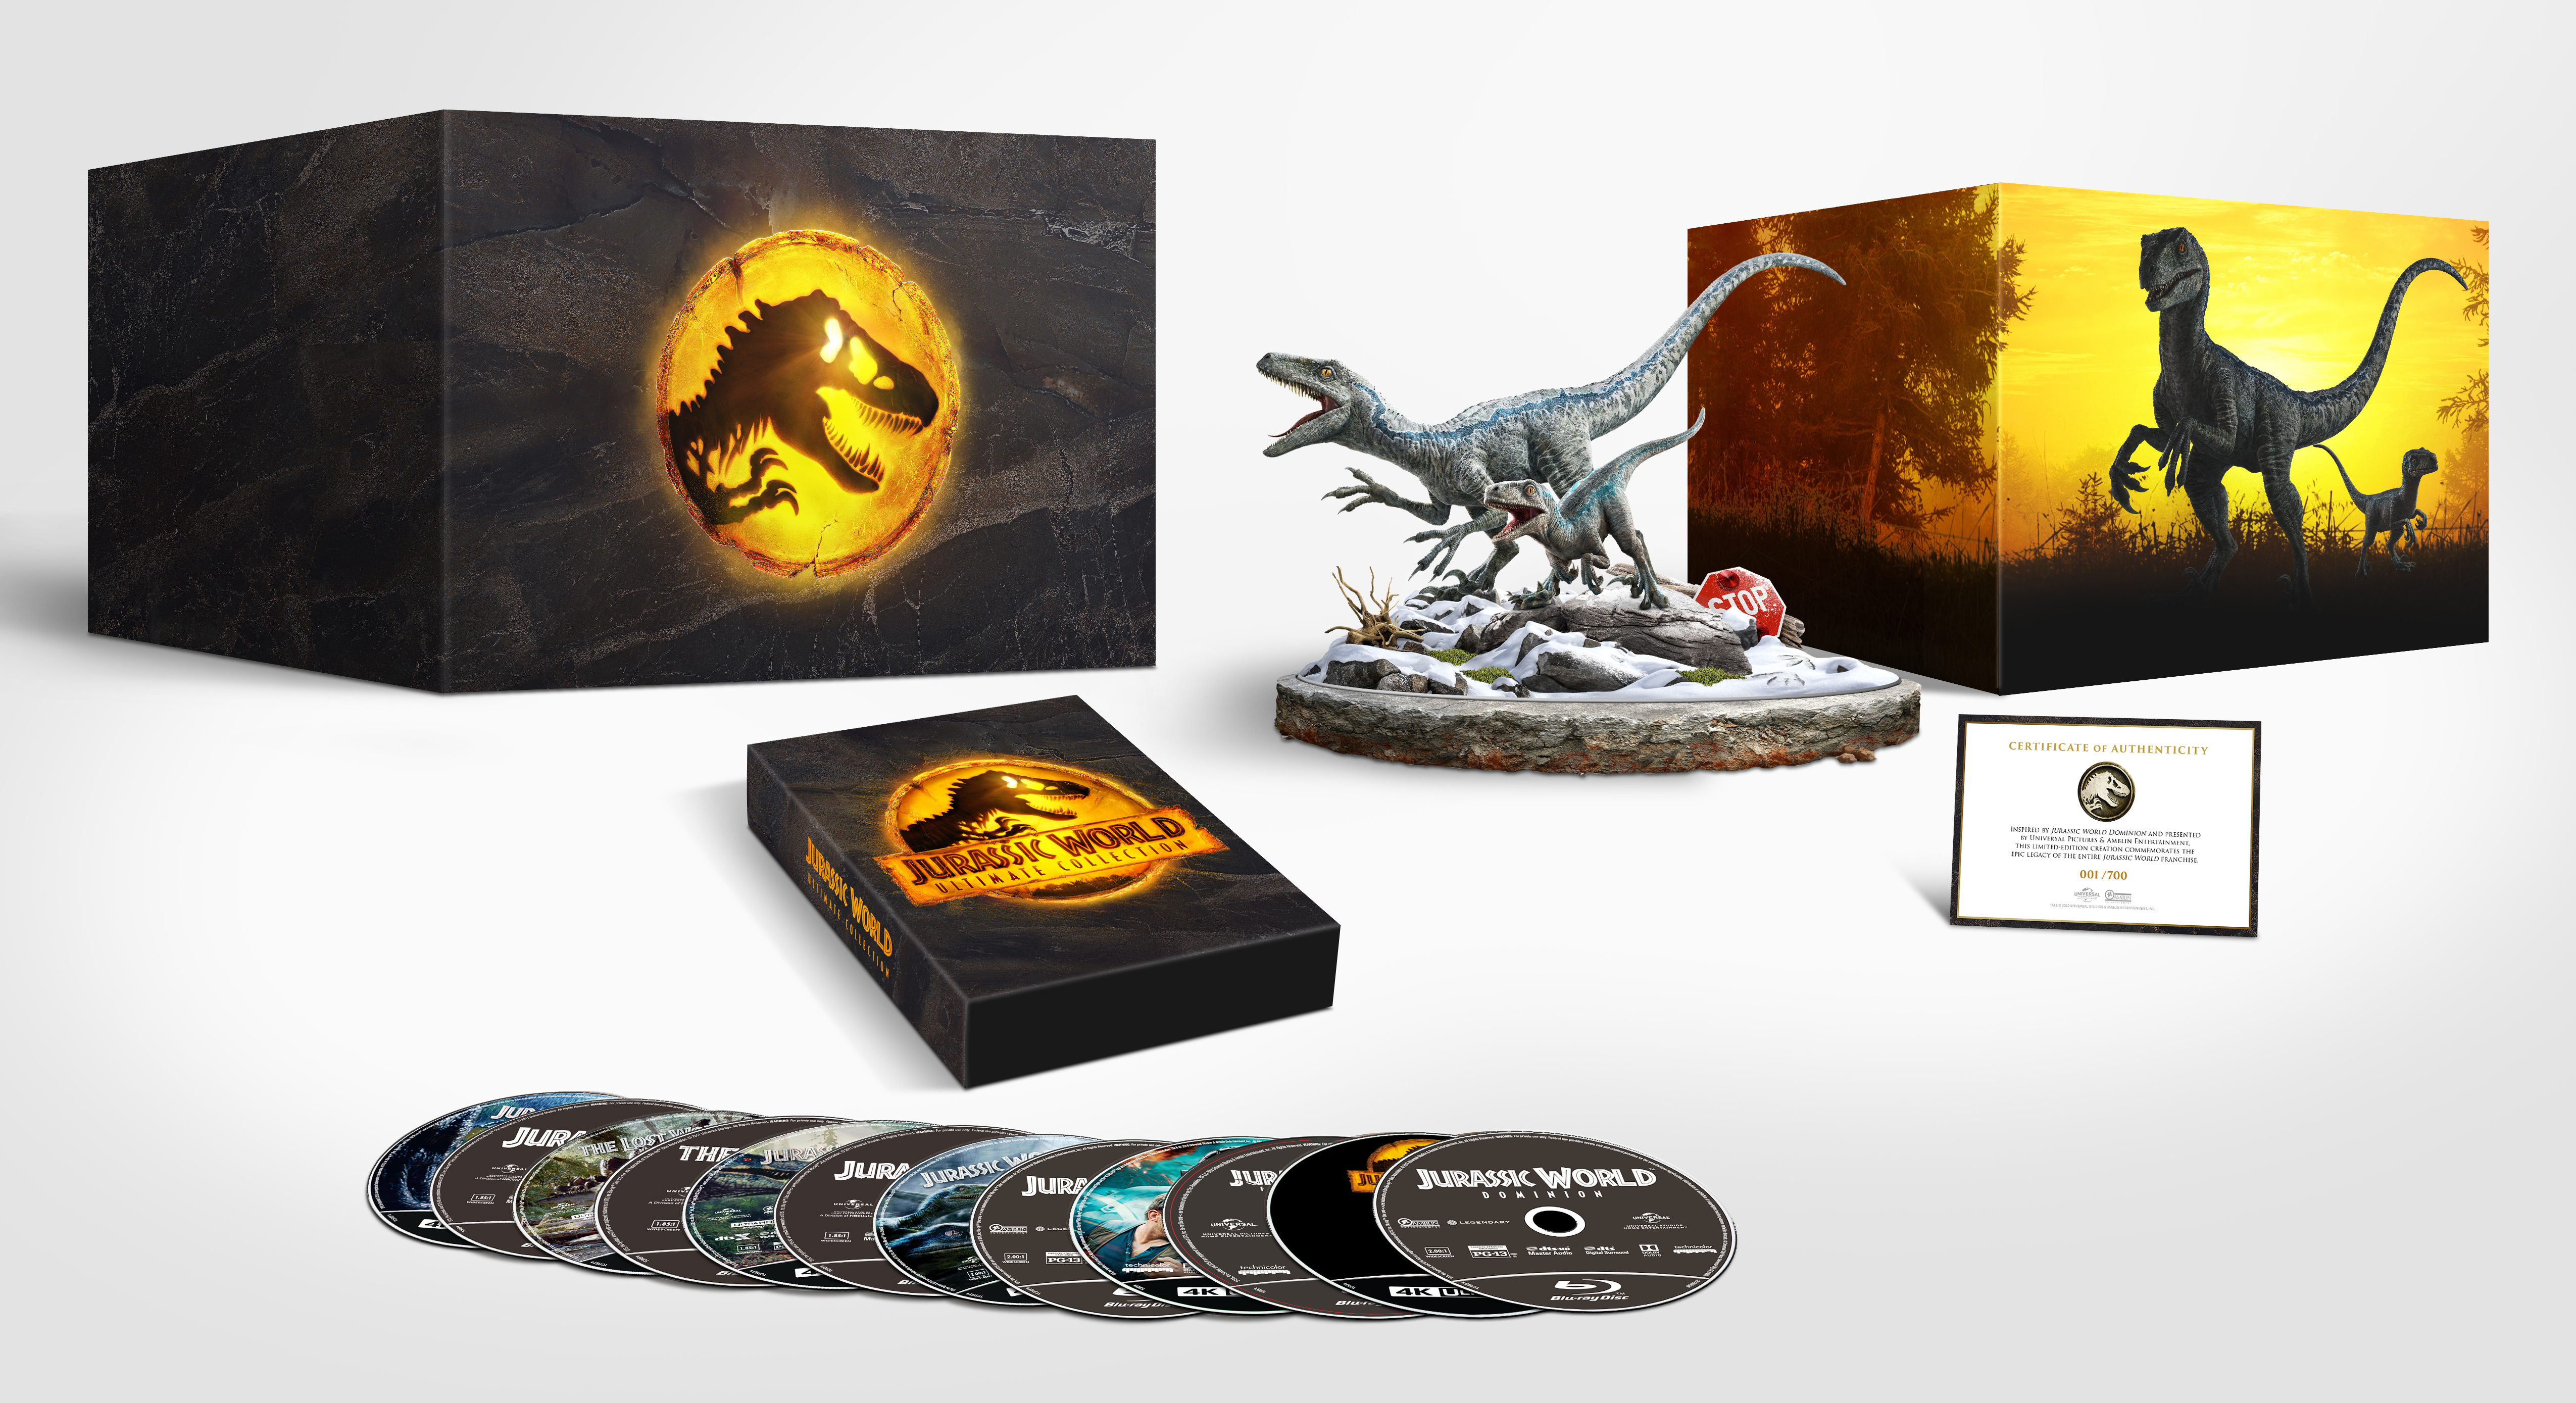 Jurassic World 6-Movie Collection [Includes Digital Copy] [4K Ultra HD Blu-ray/Blu-ray] [Gift Set]